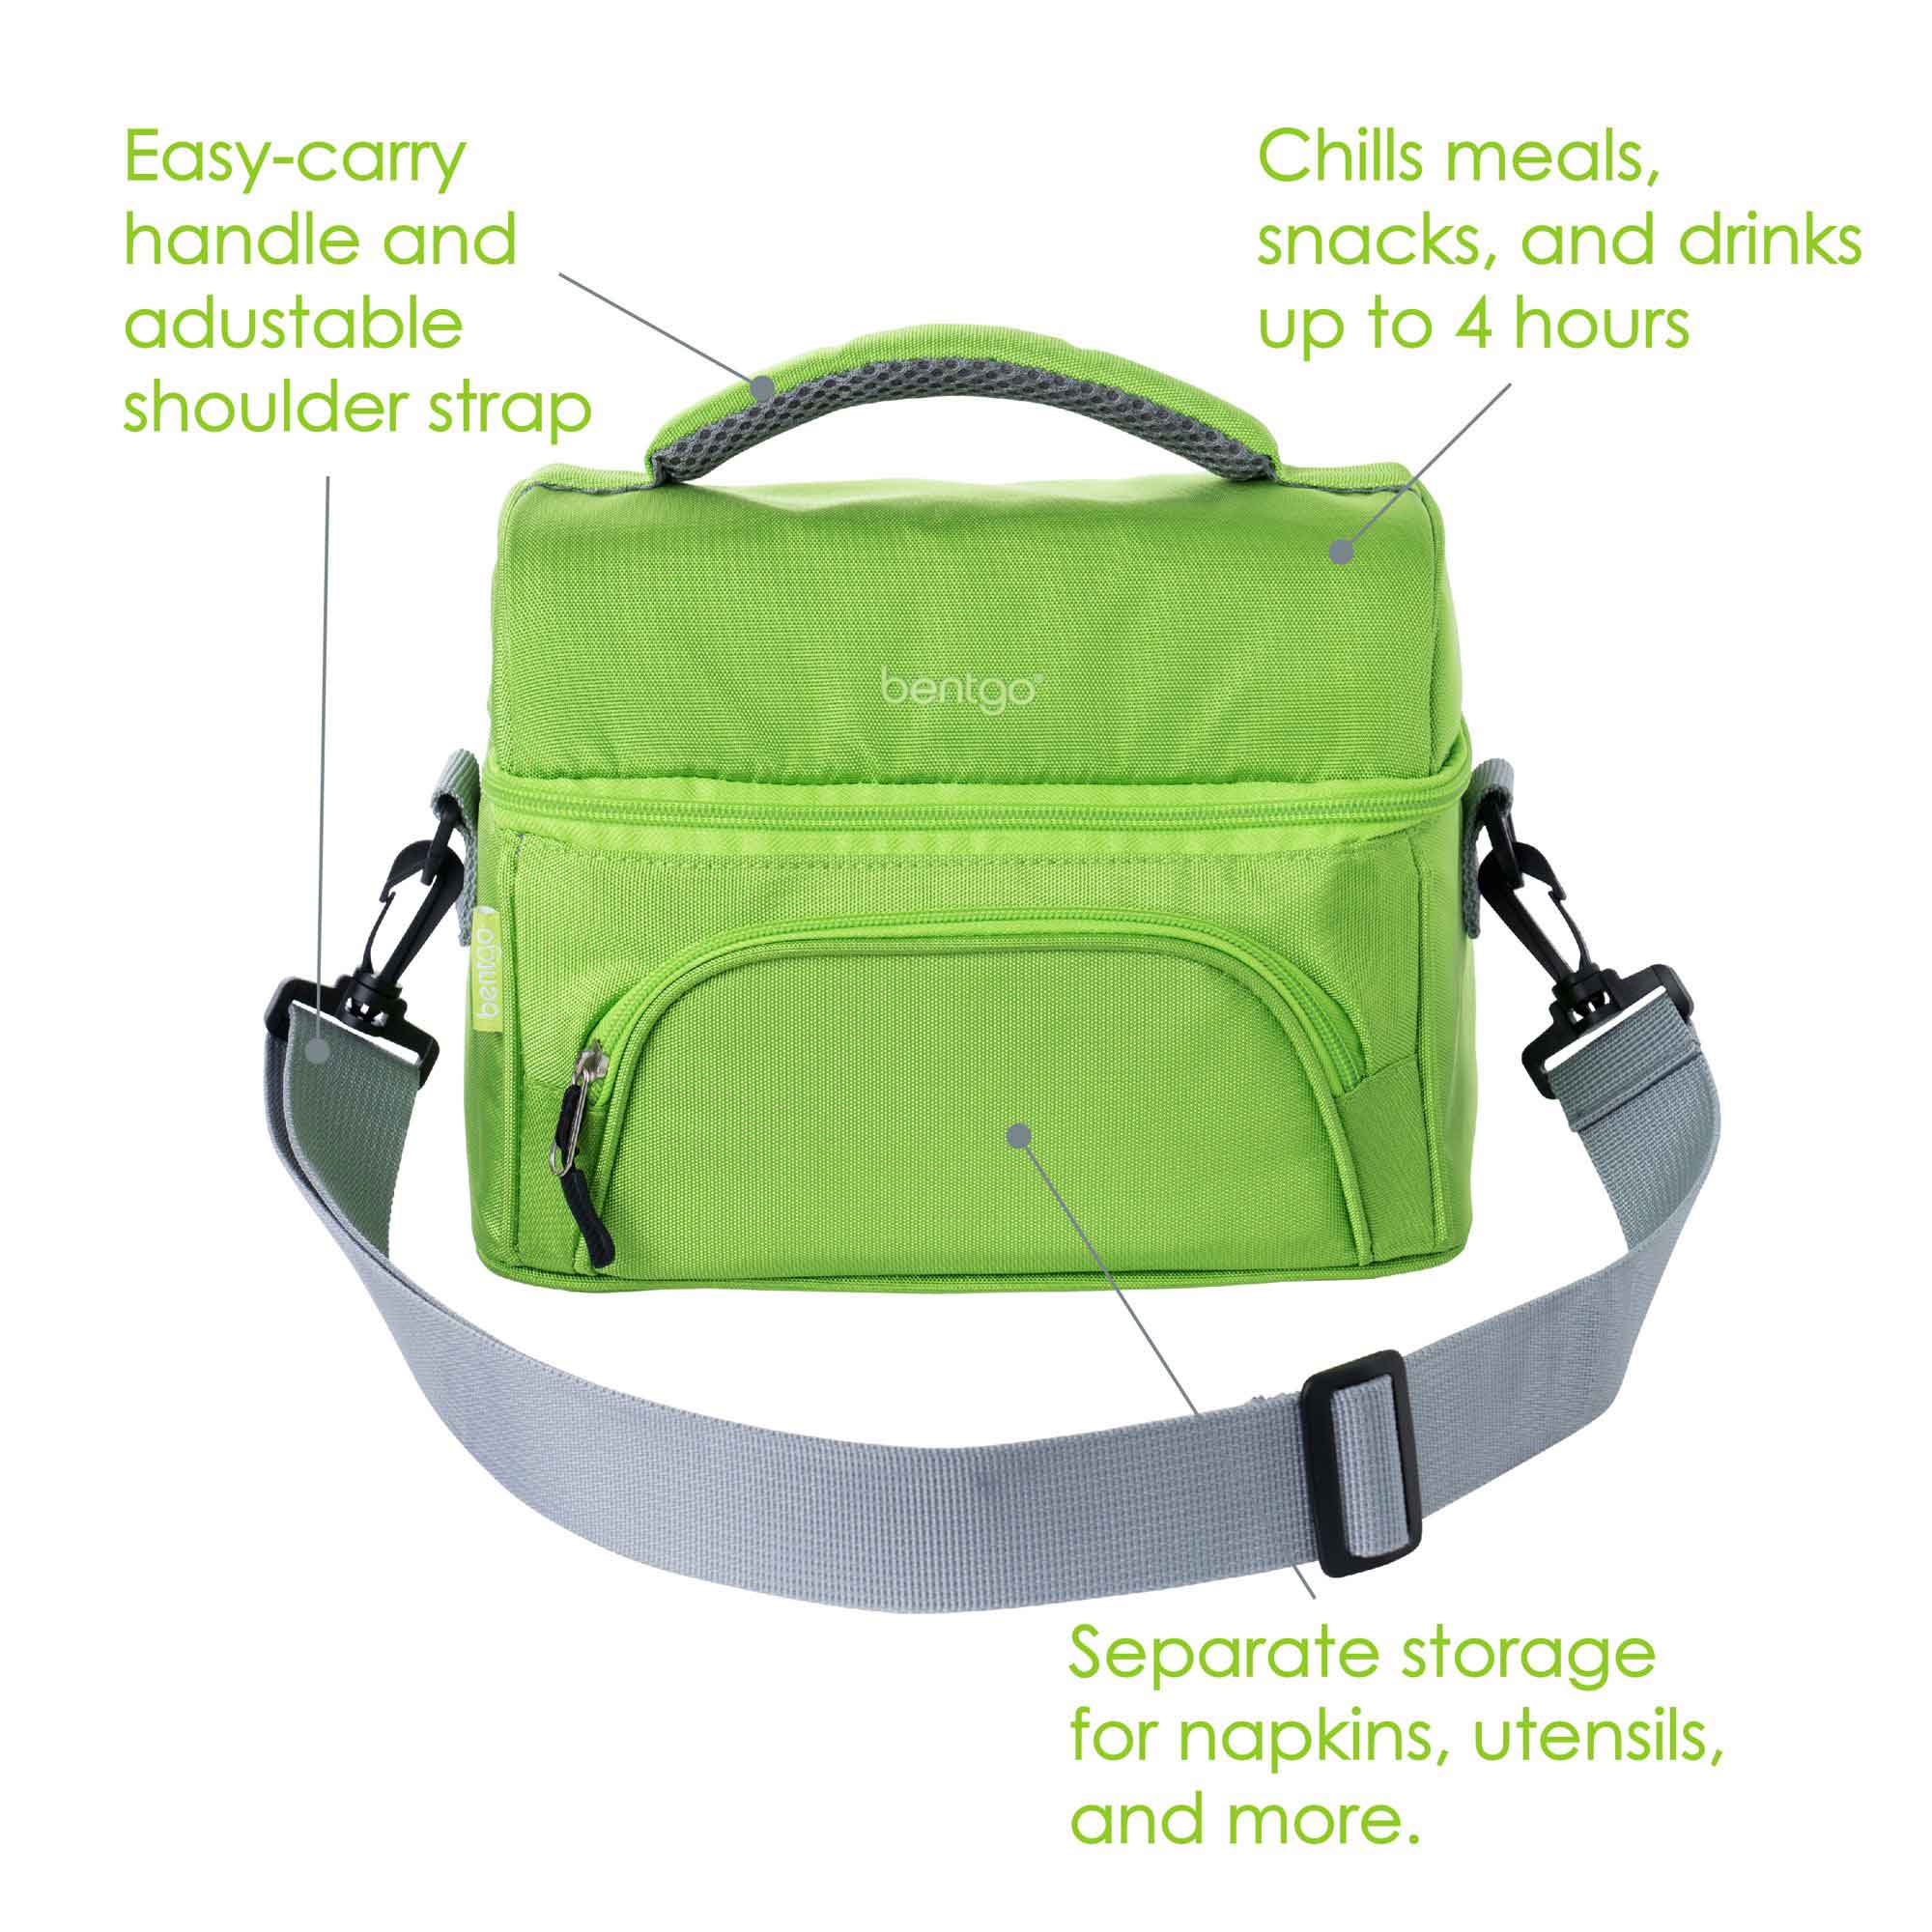 Bentgo Lunch Bag - 2-Way Zipper, Adjustable Strap, and Front Pocket - Zars  Buy